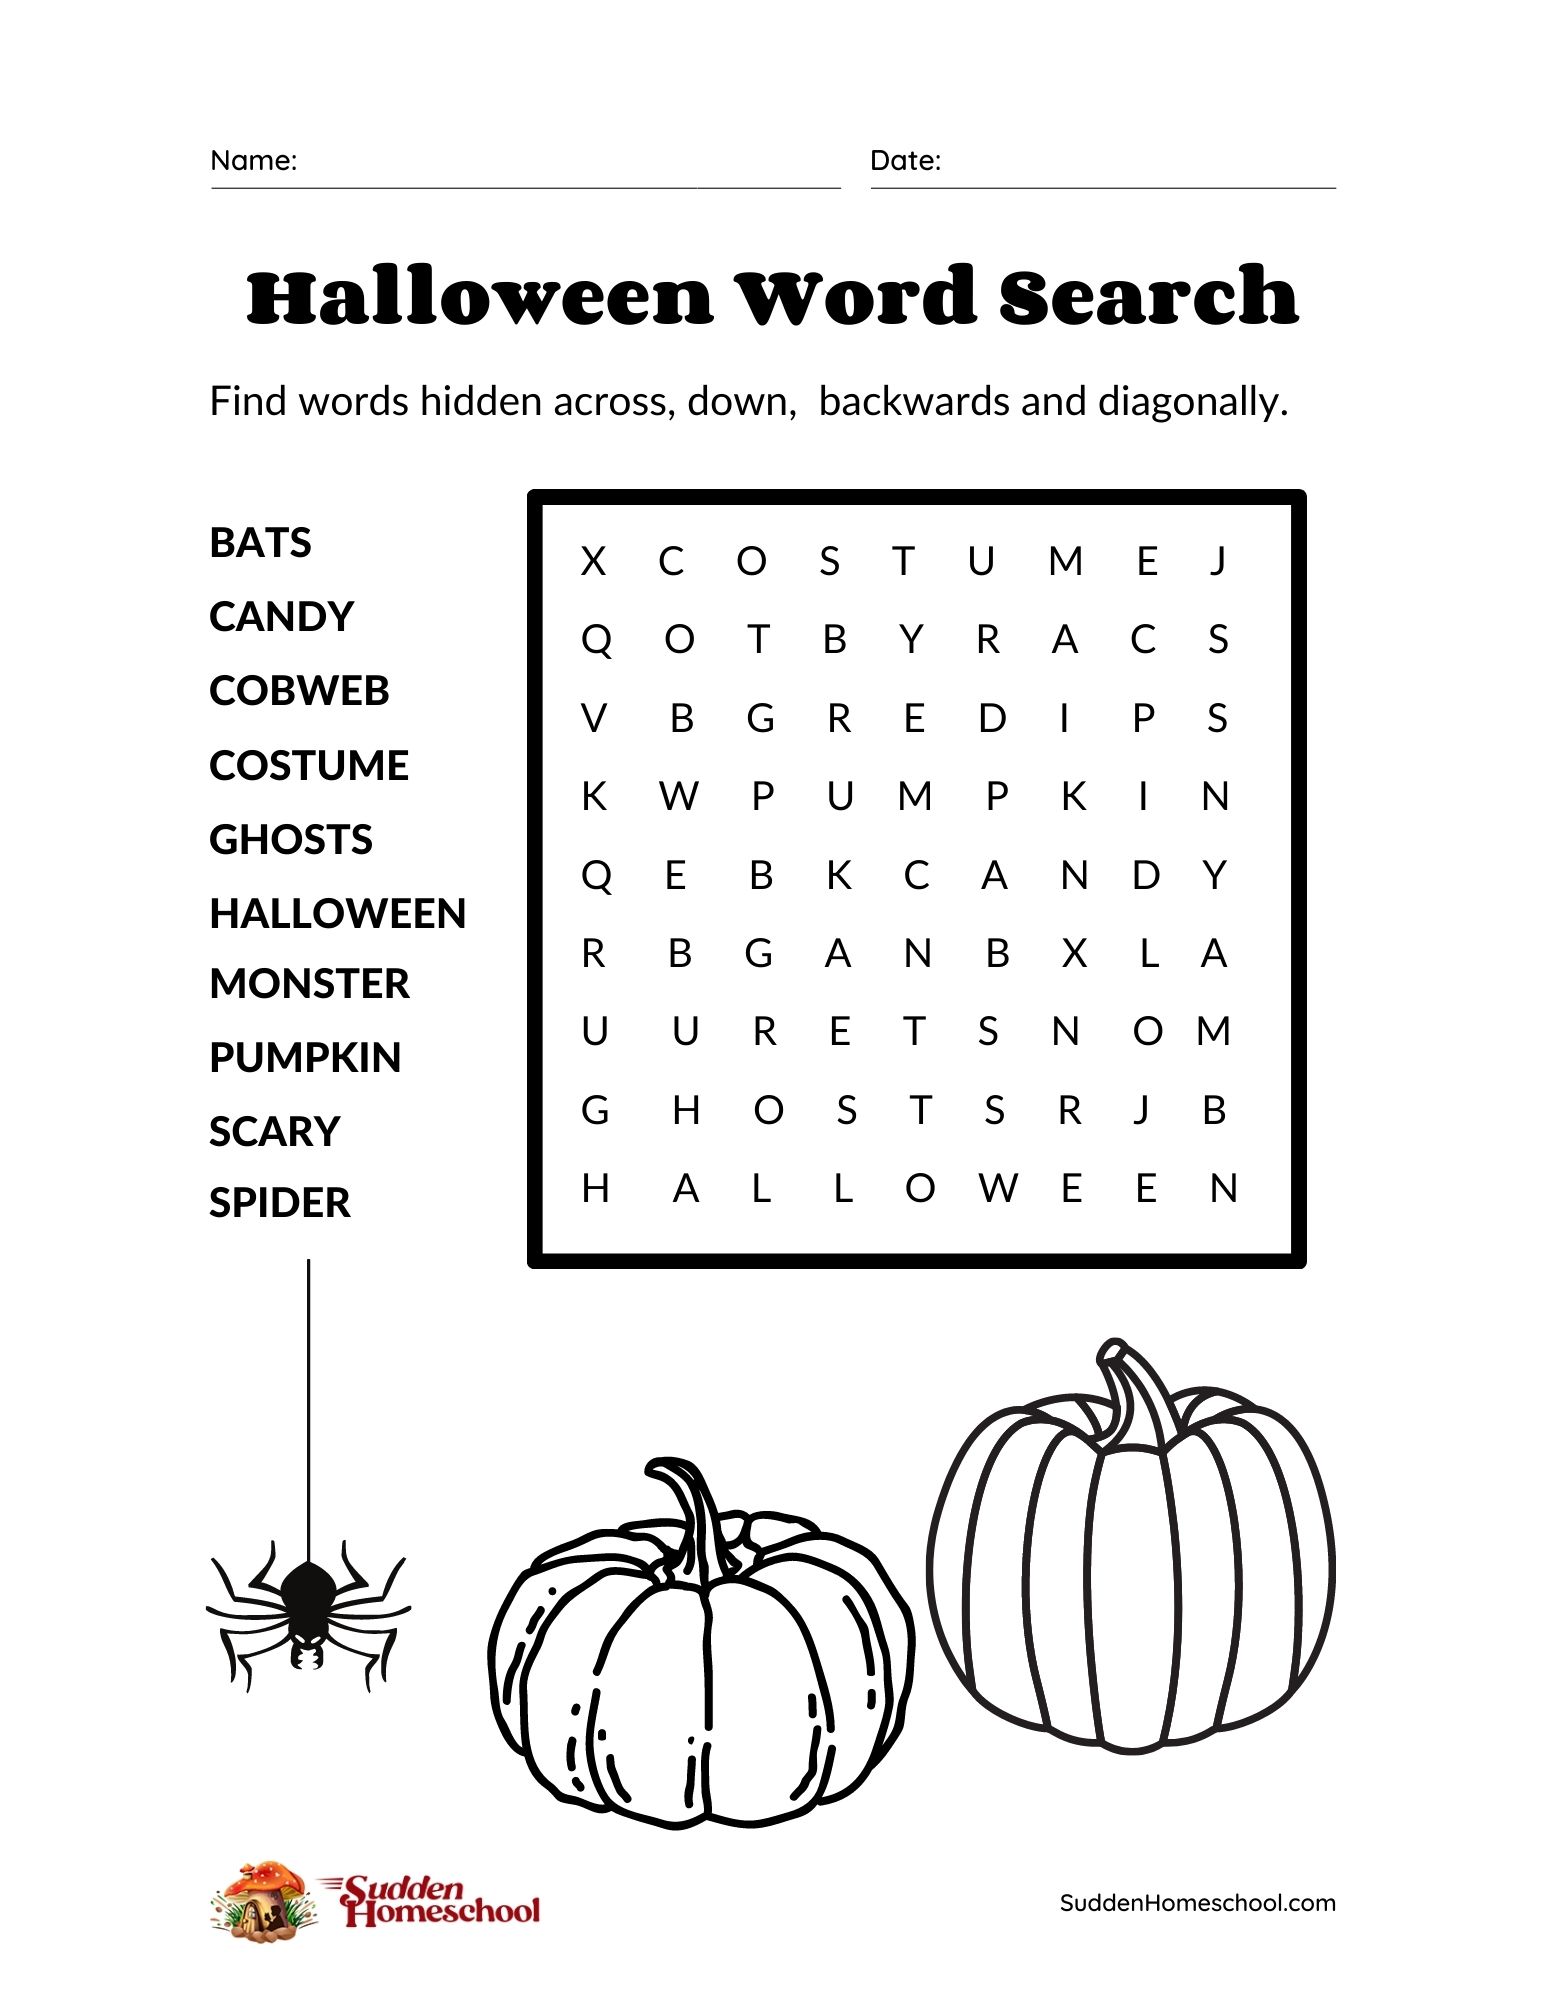 halloween-word-search-printable-sudden-homeschool